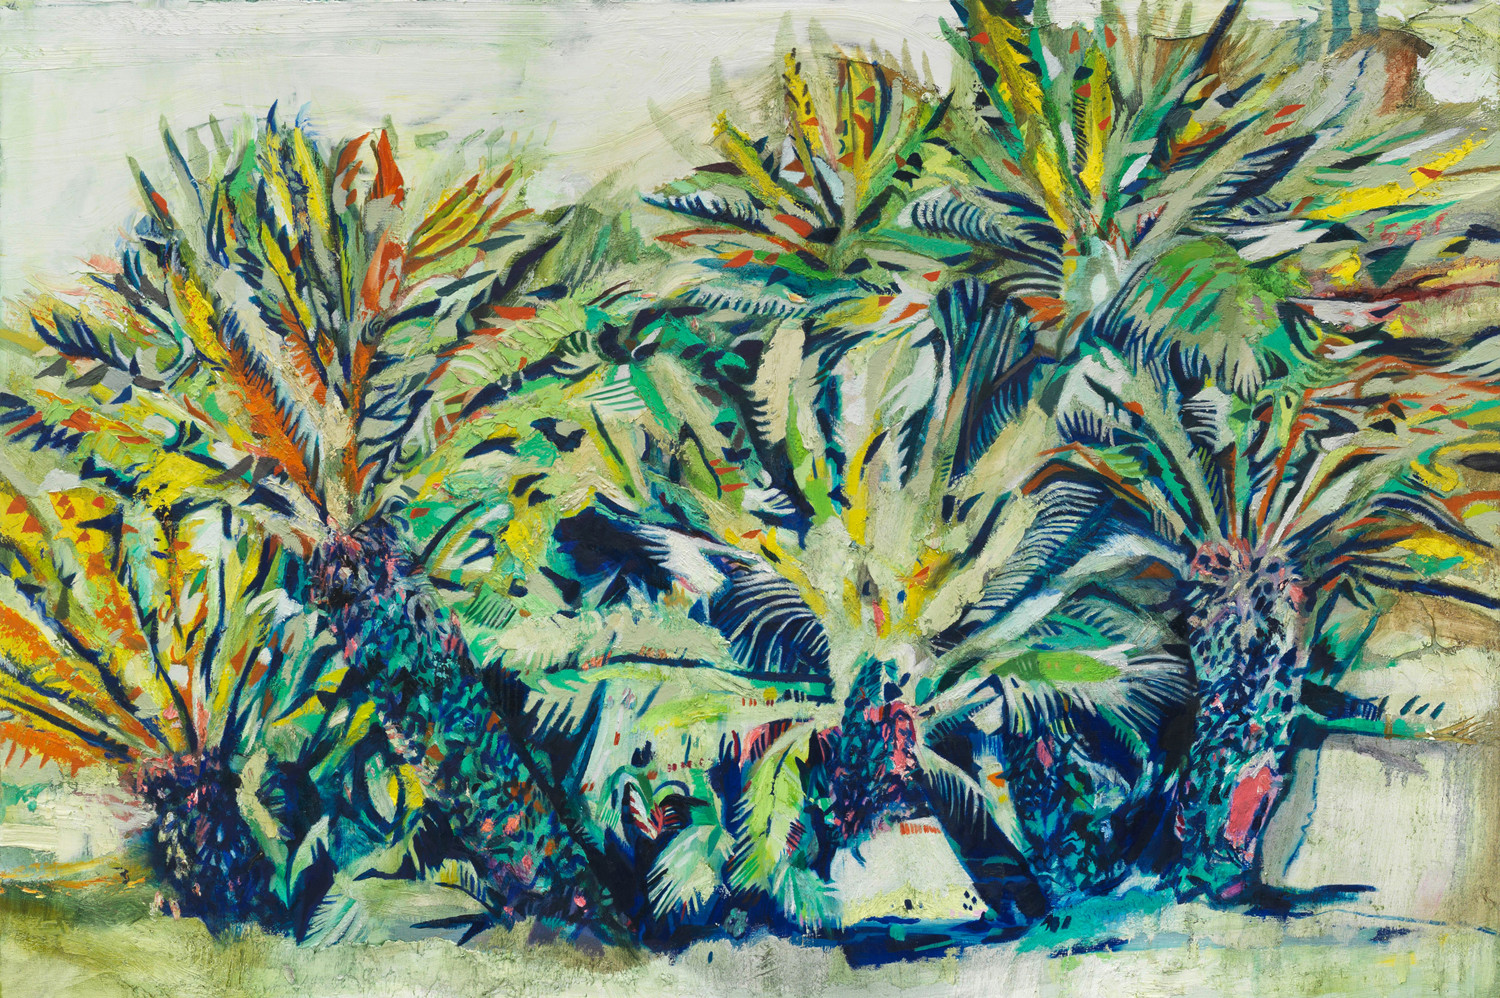 Raffi Kalenderian, ‘Huntington Gardens’, 2013, Oil on canvas